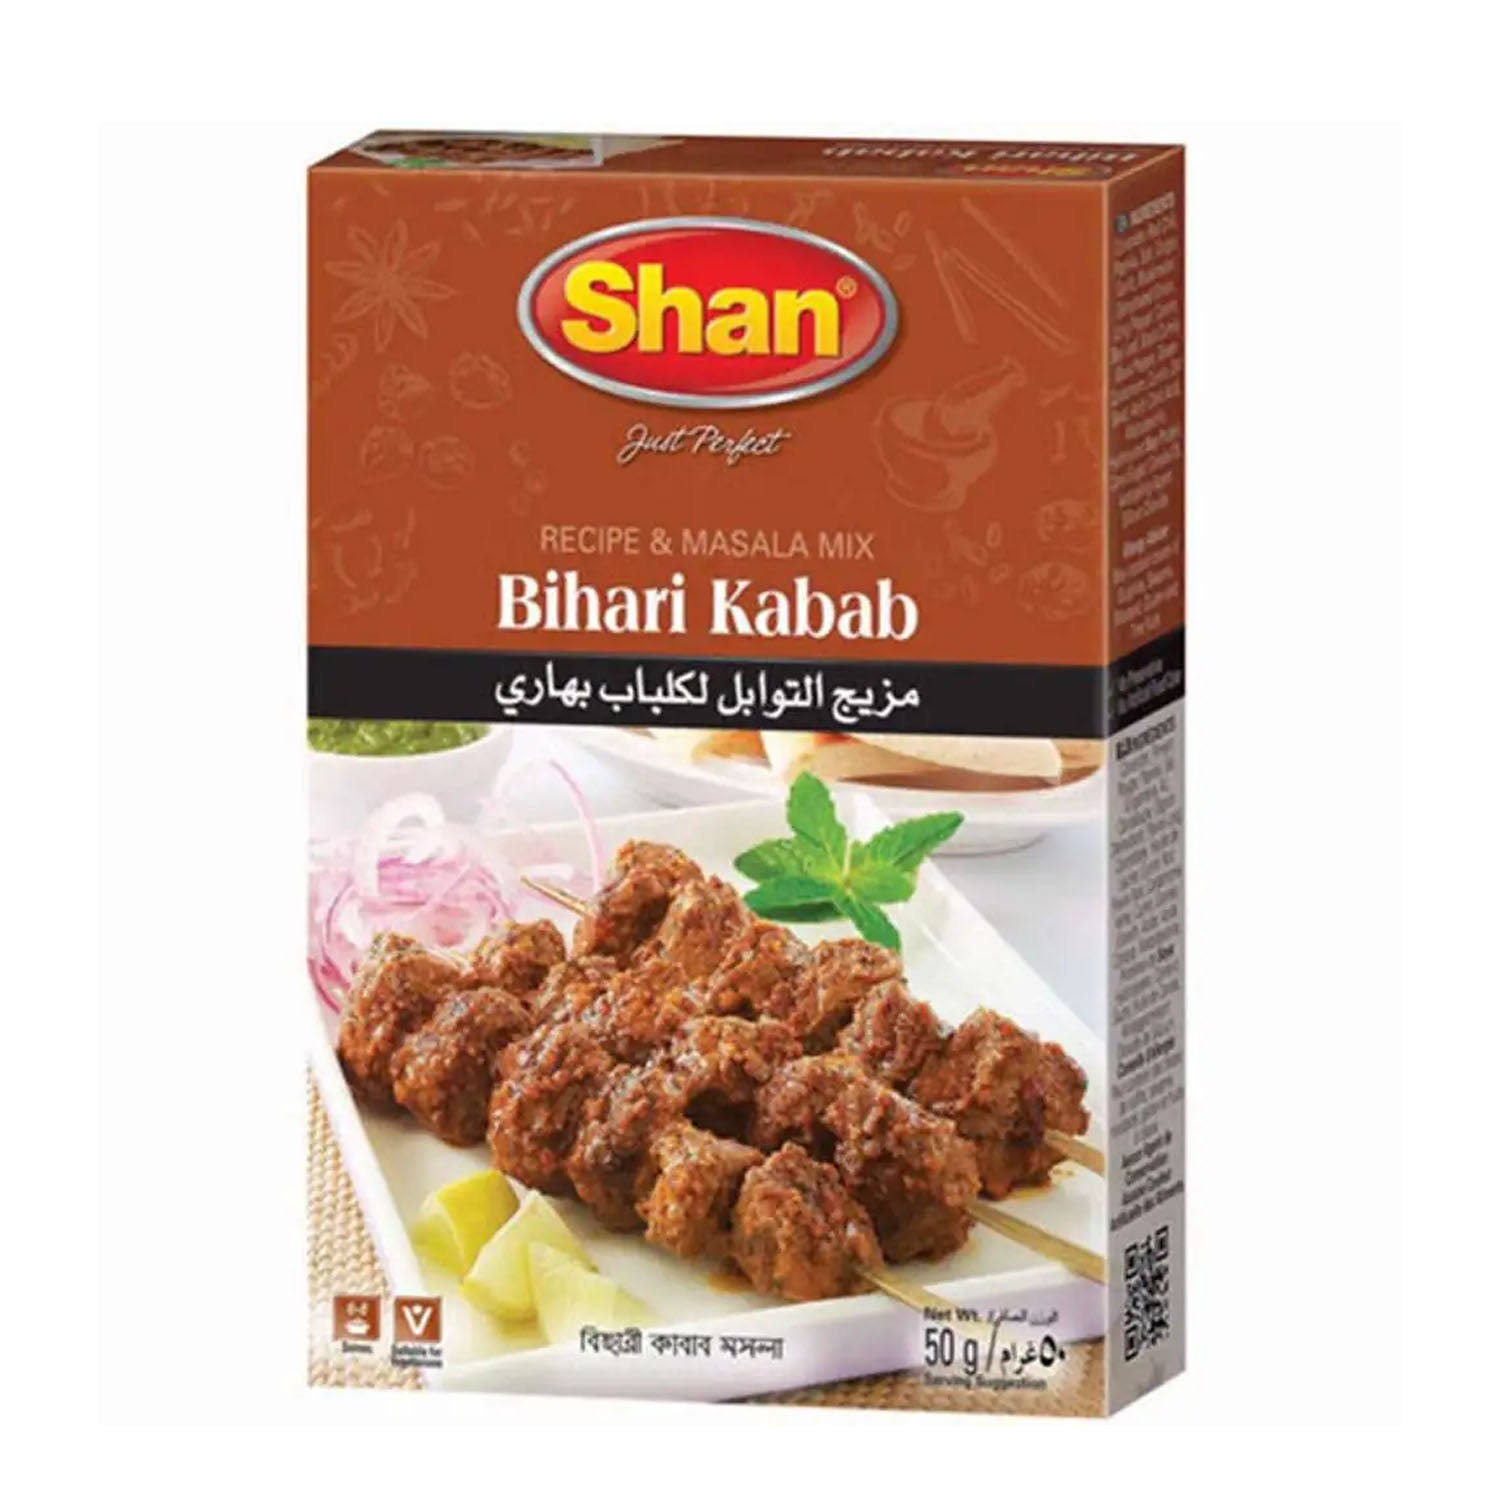 Shan Bihari Kabab BBQ Mix - 50g